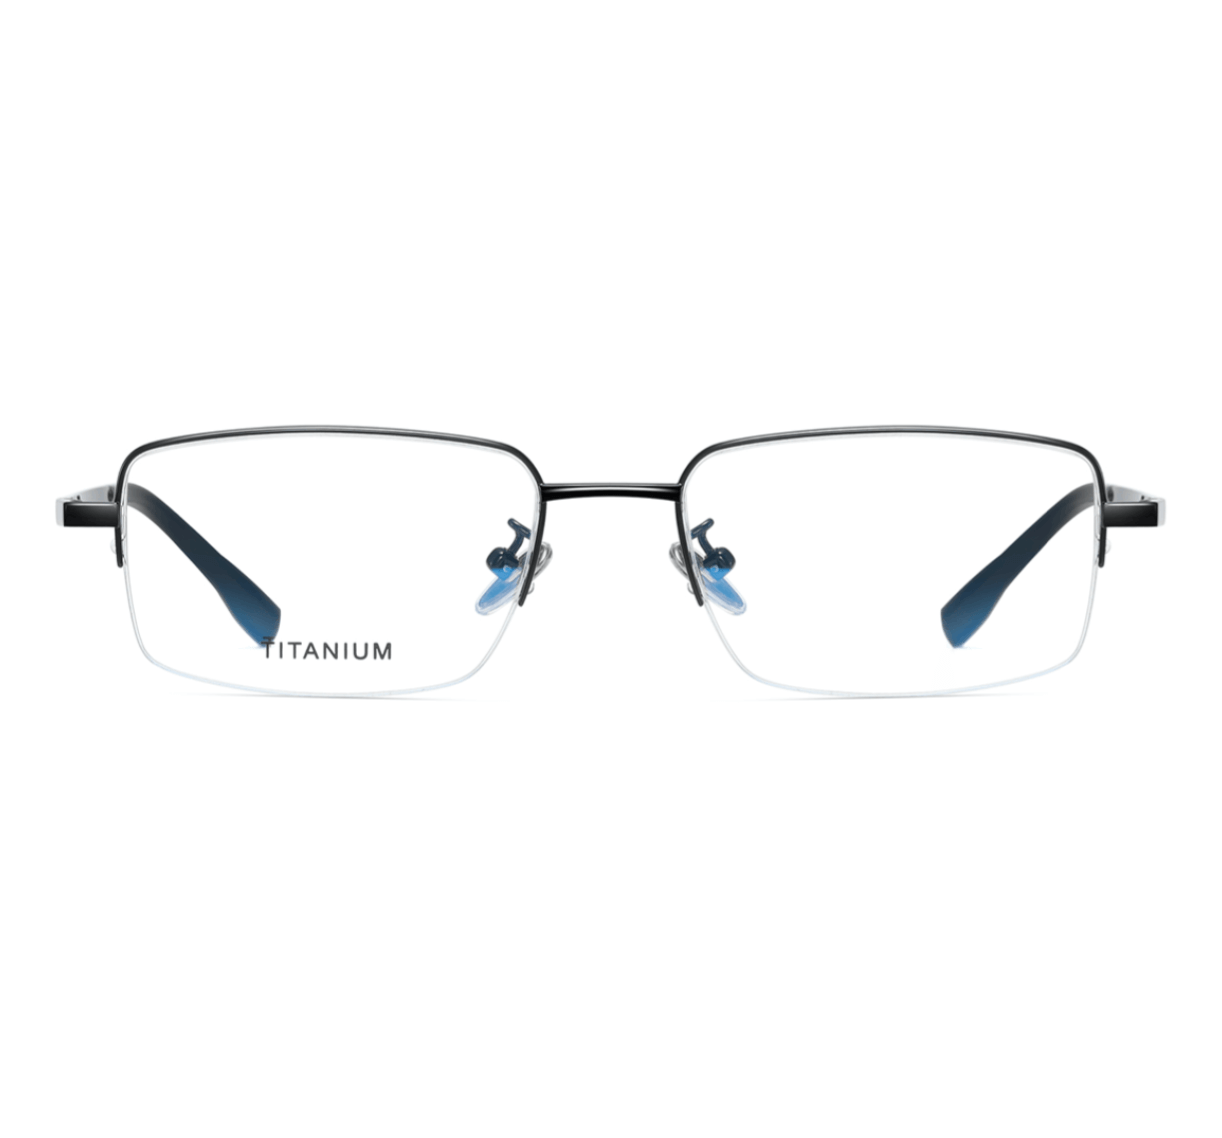 Titanium optical frame, titanium eyeglass frames manufacturers